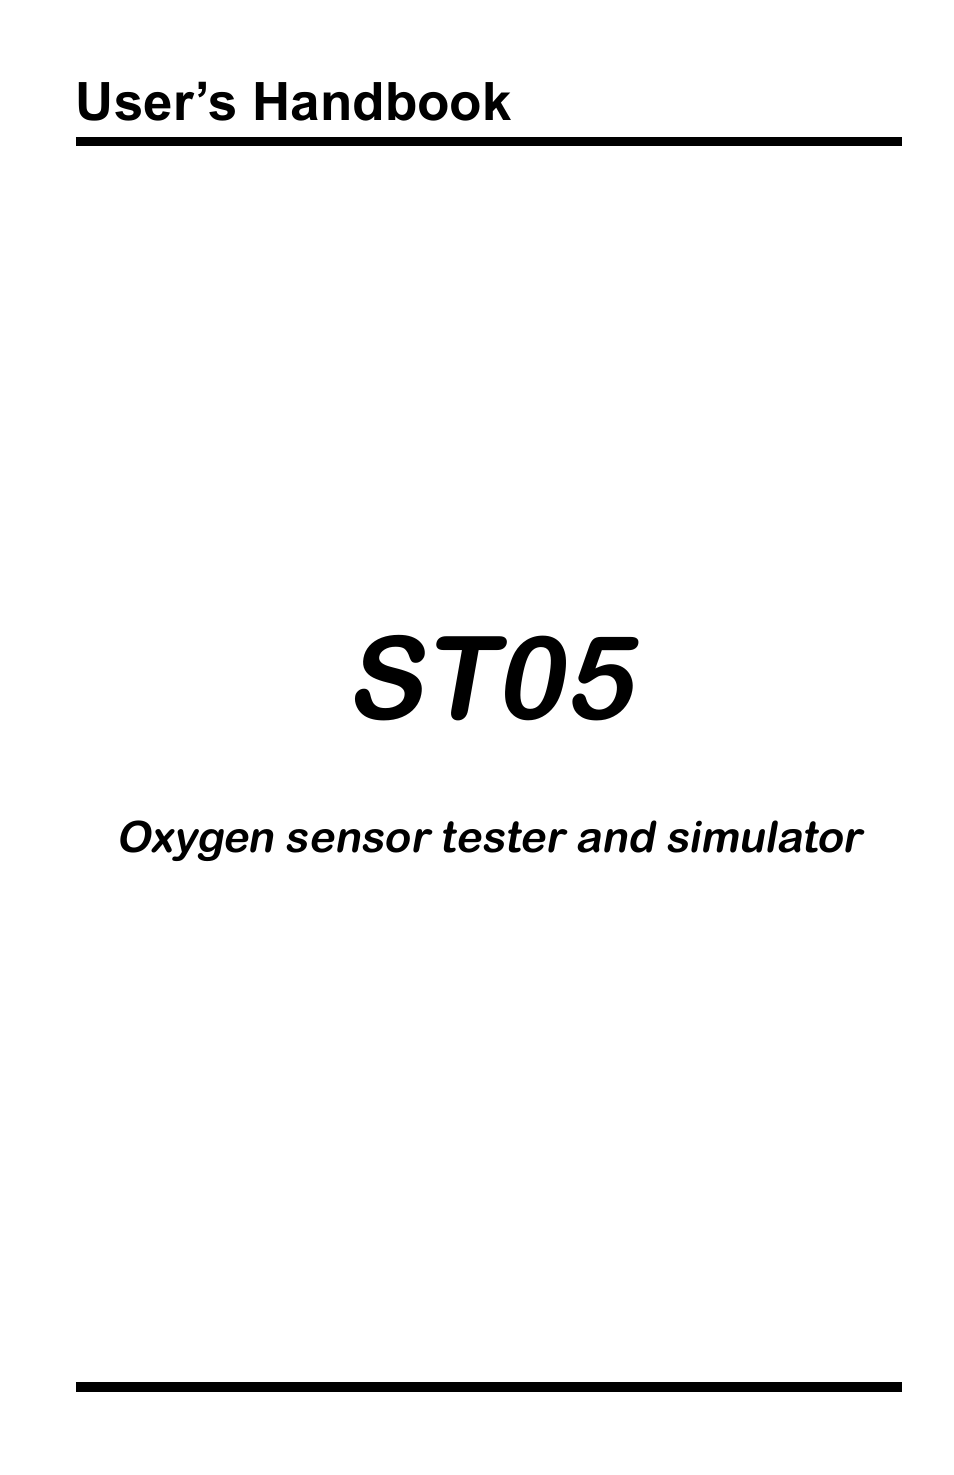 ST05 Oxygen Sensor Tester and Simulator